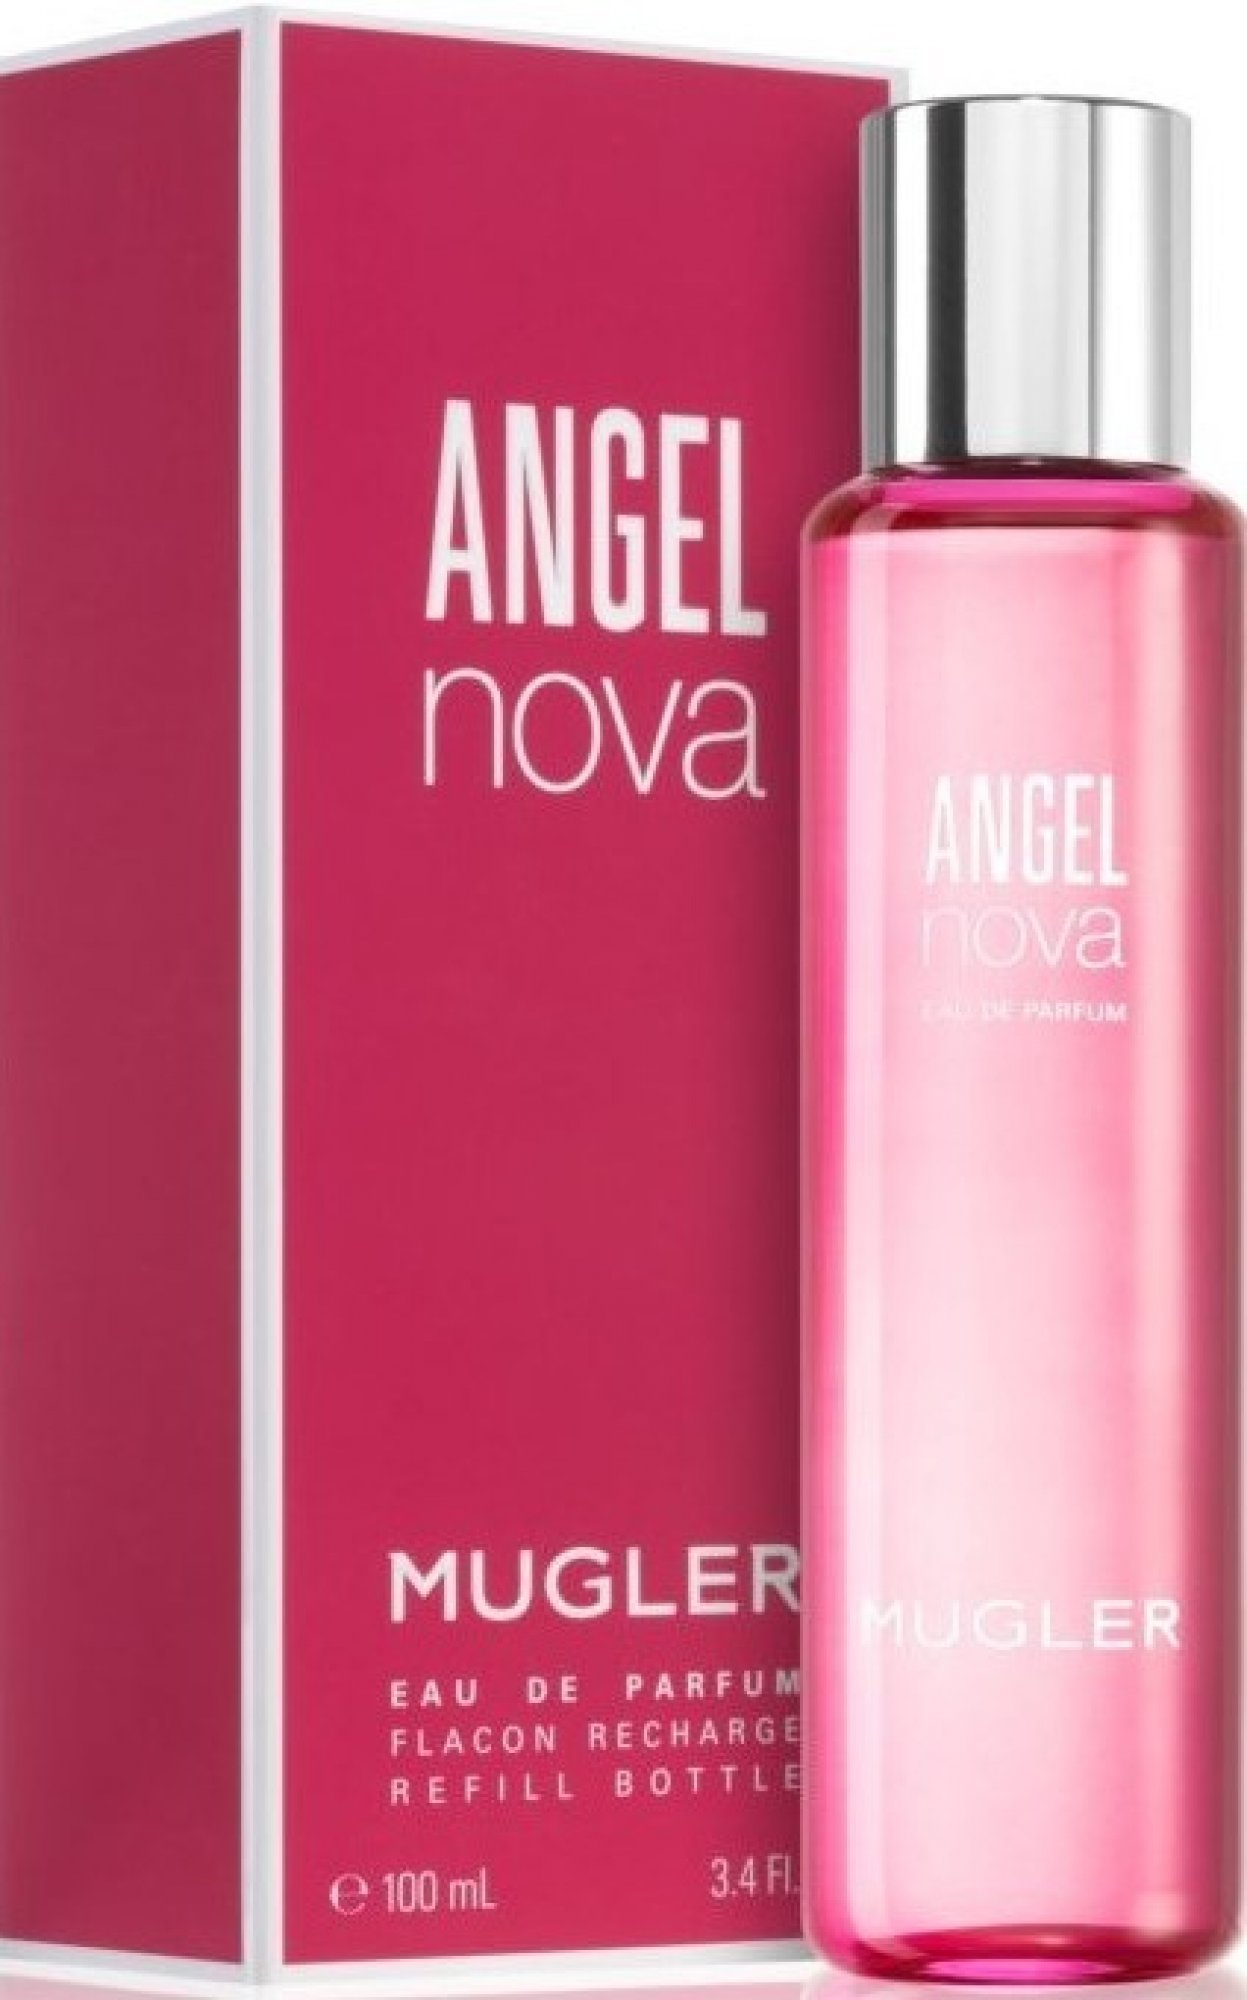 Thierry Mugler Angel Nova Eau de Parfum - αναπλήρωση, 100 ml